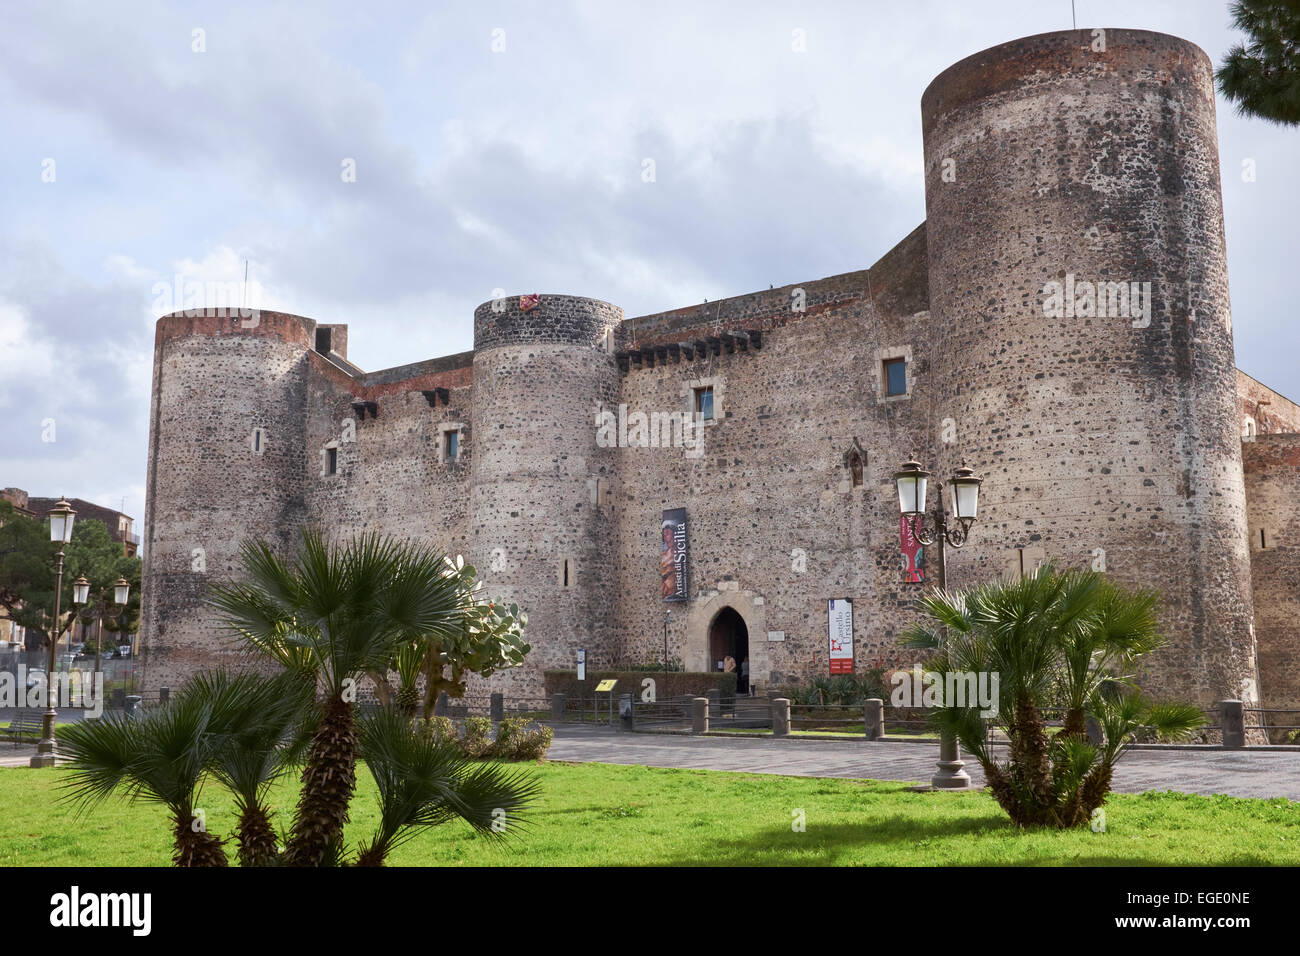 Castello  Ursino, Catania, Sicily, Italy. Italian Tourism, Travel and Holiday Destination. Stock Photo